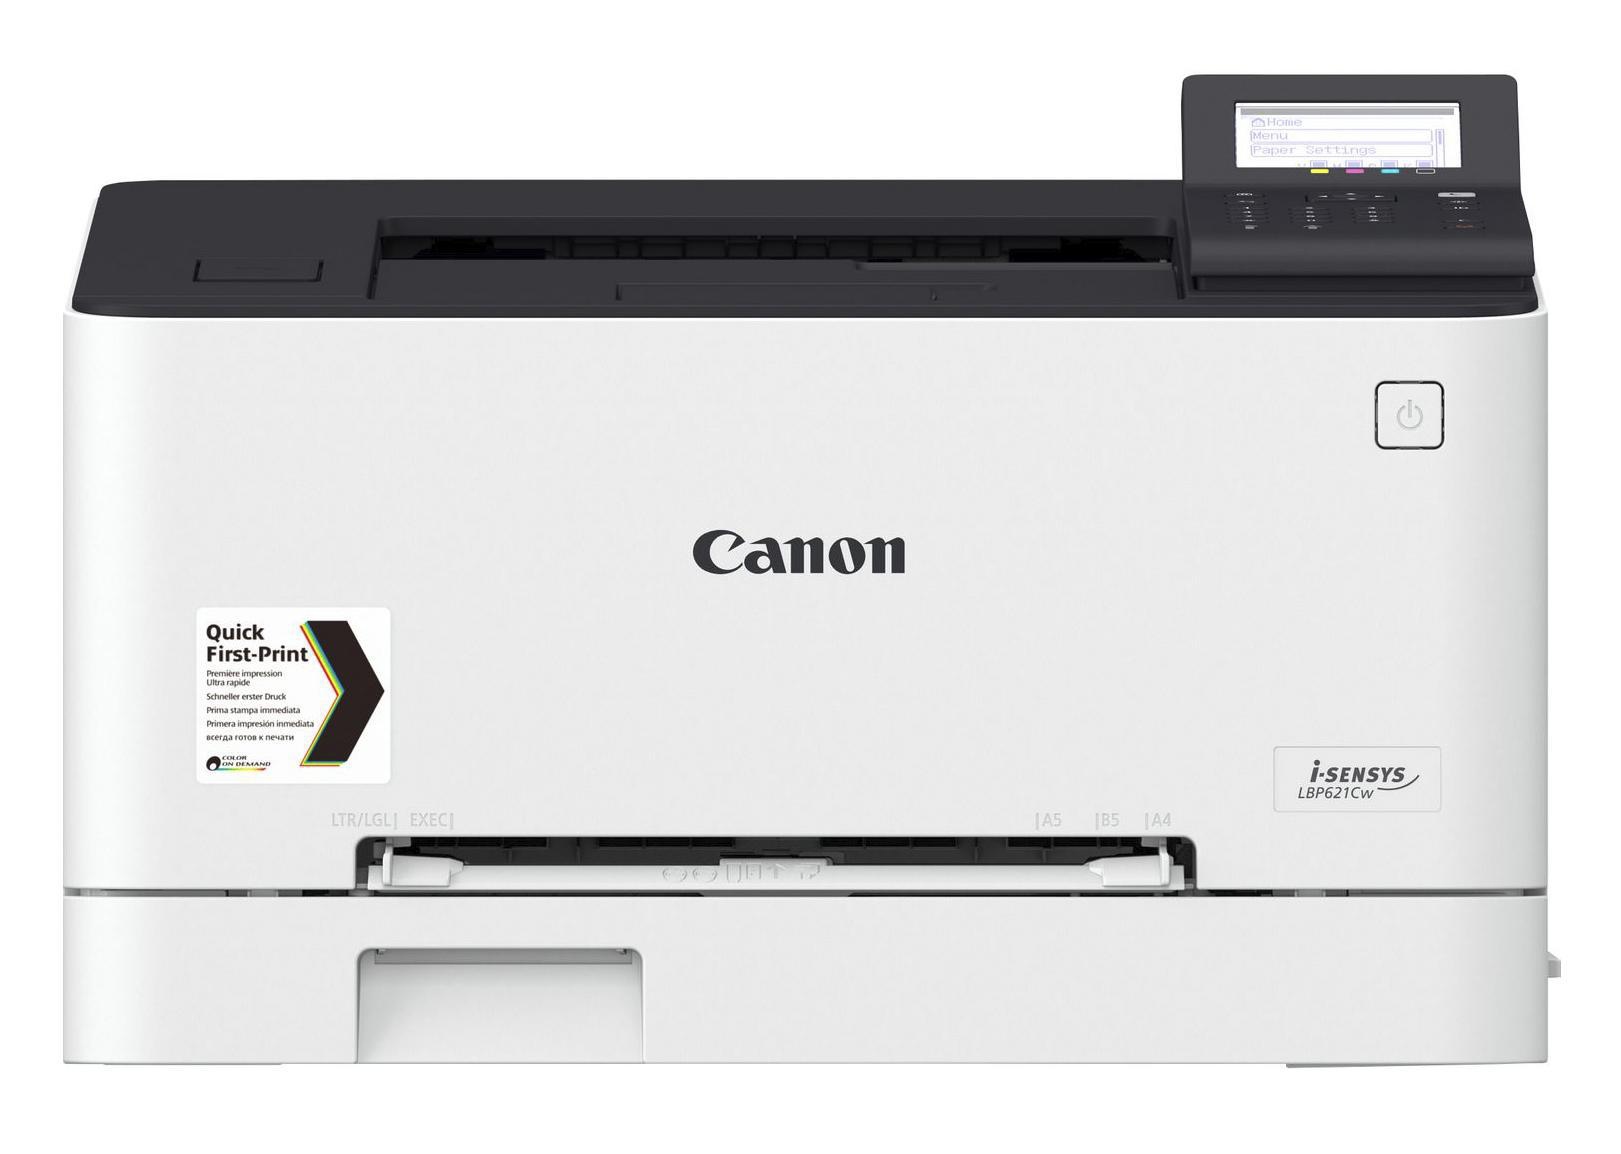 WLAN Laserdrucker LBP621CW Netzwerkfähig i-SENSYS CANON Laser